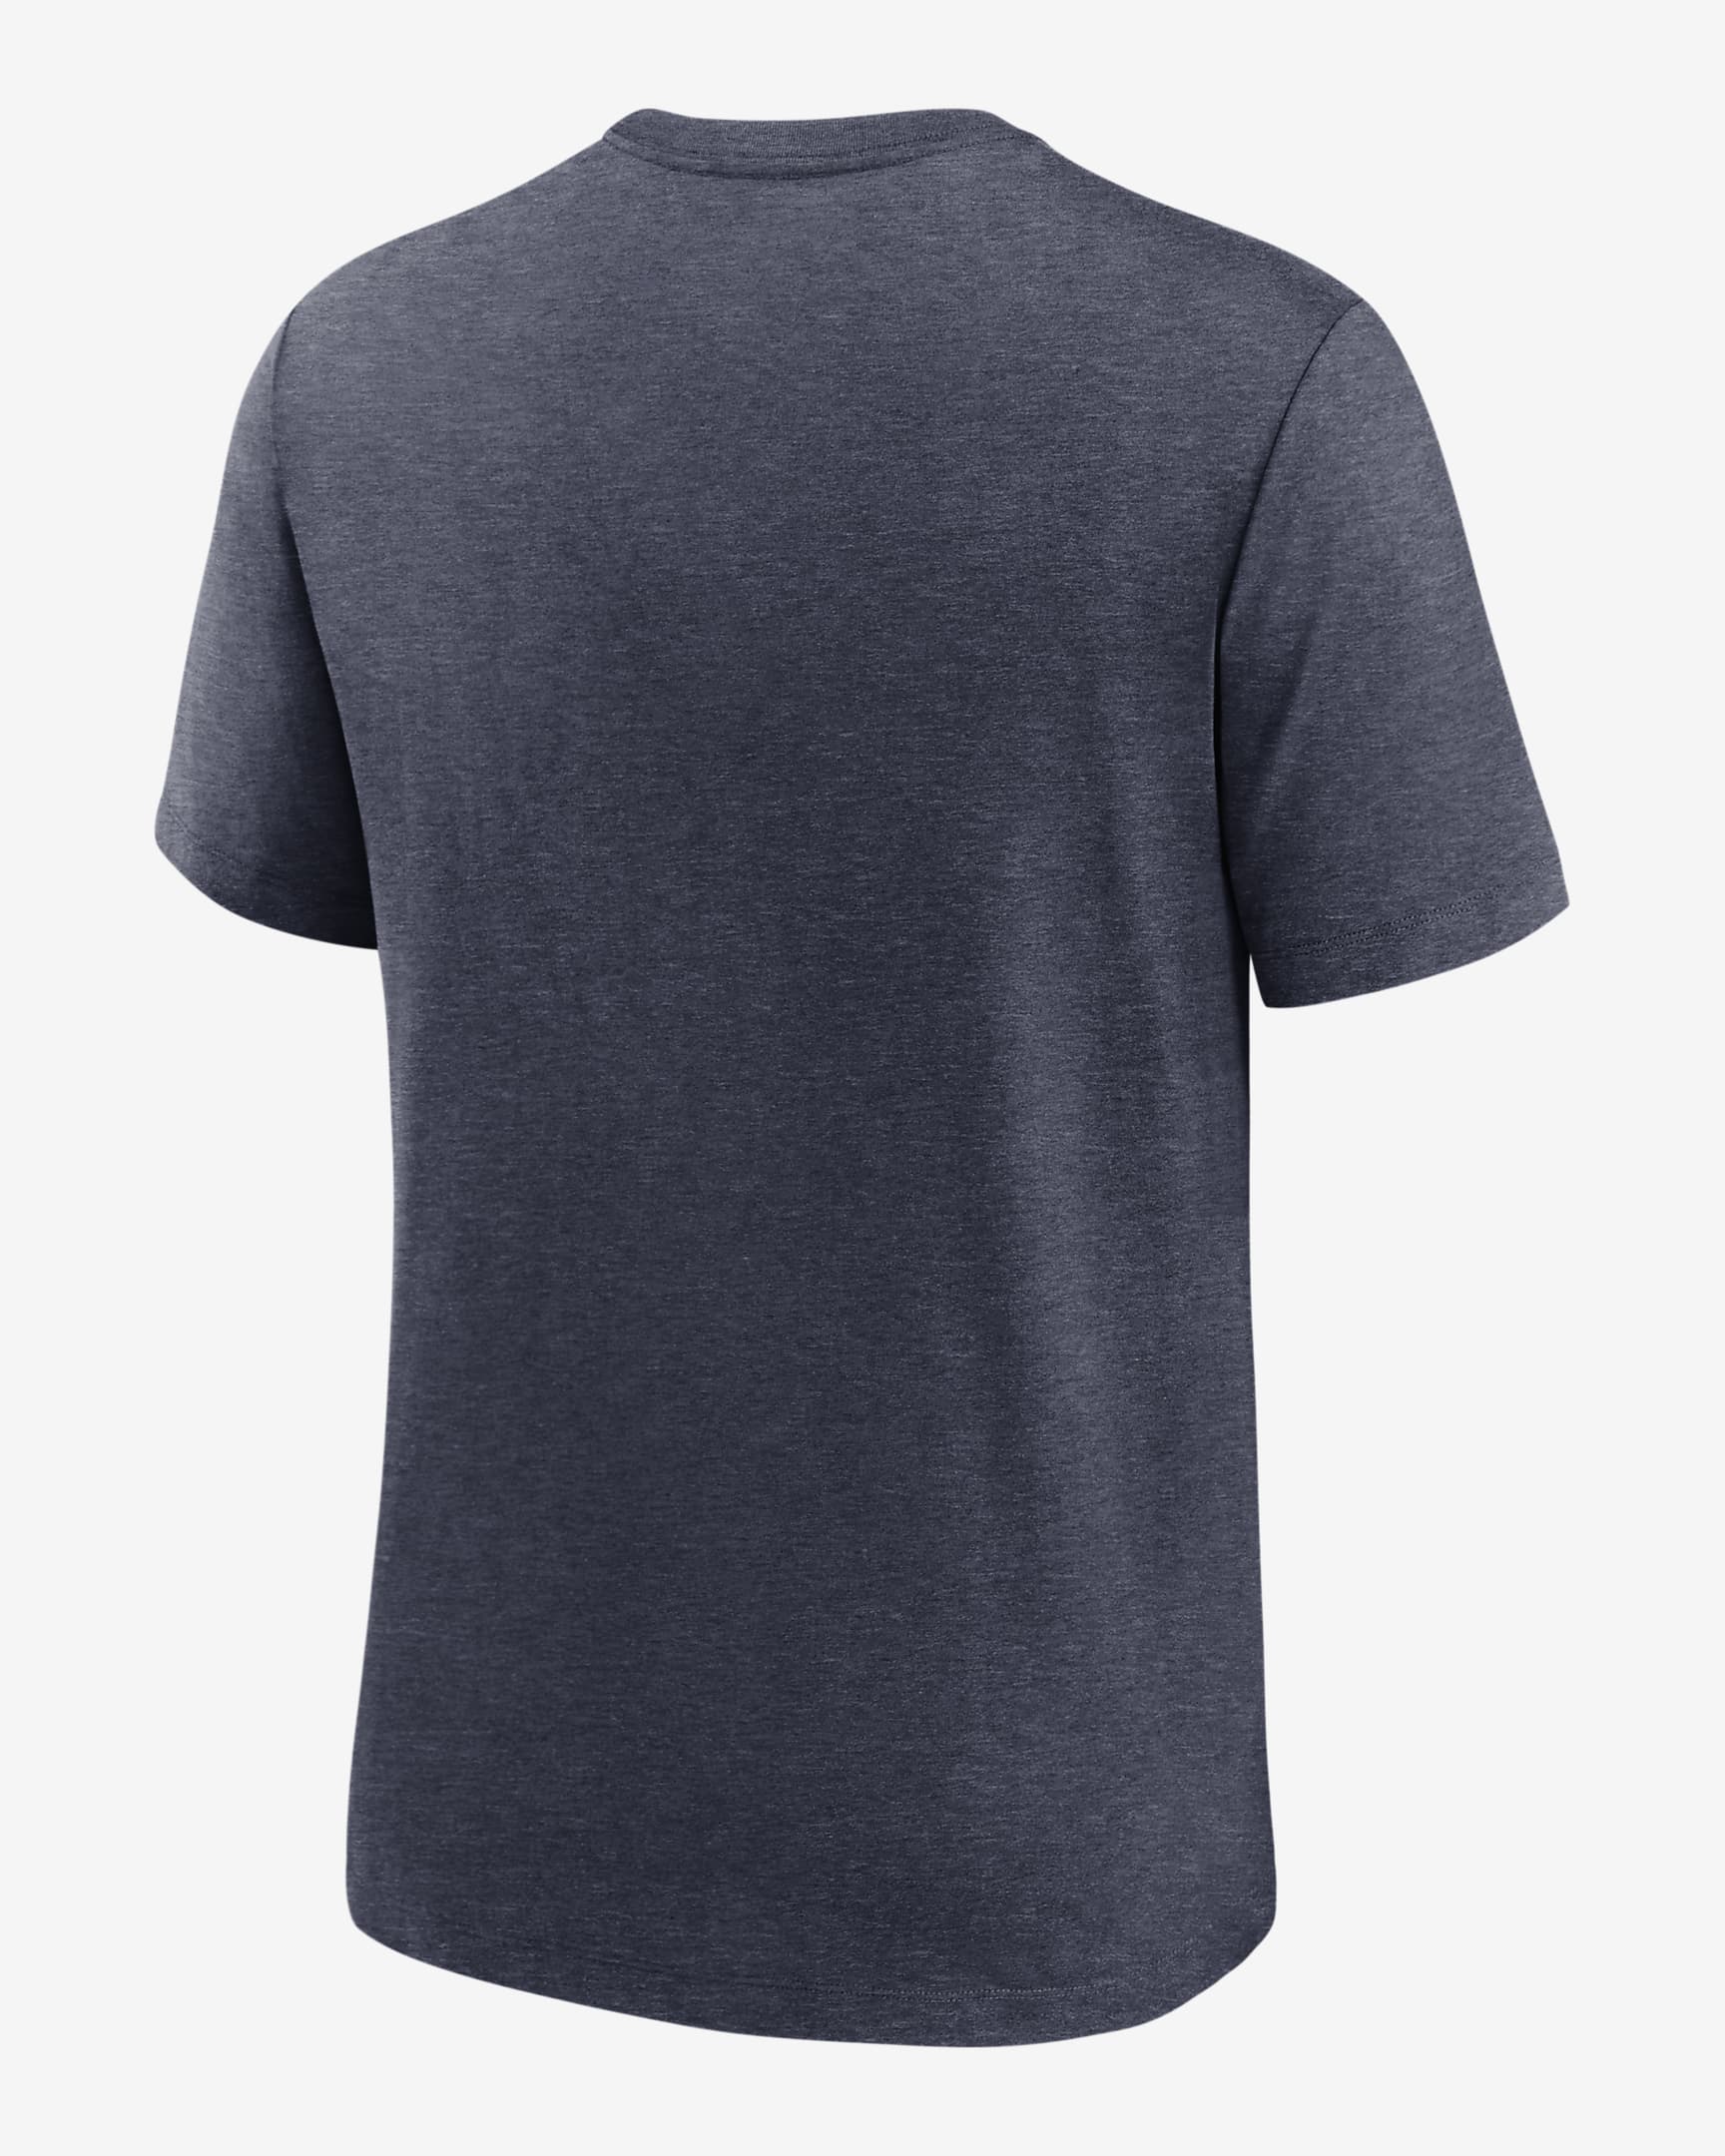 Nike Home Spin (MLB Cleveland Guardians) Men's T-Shirt. Nike.com